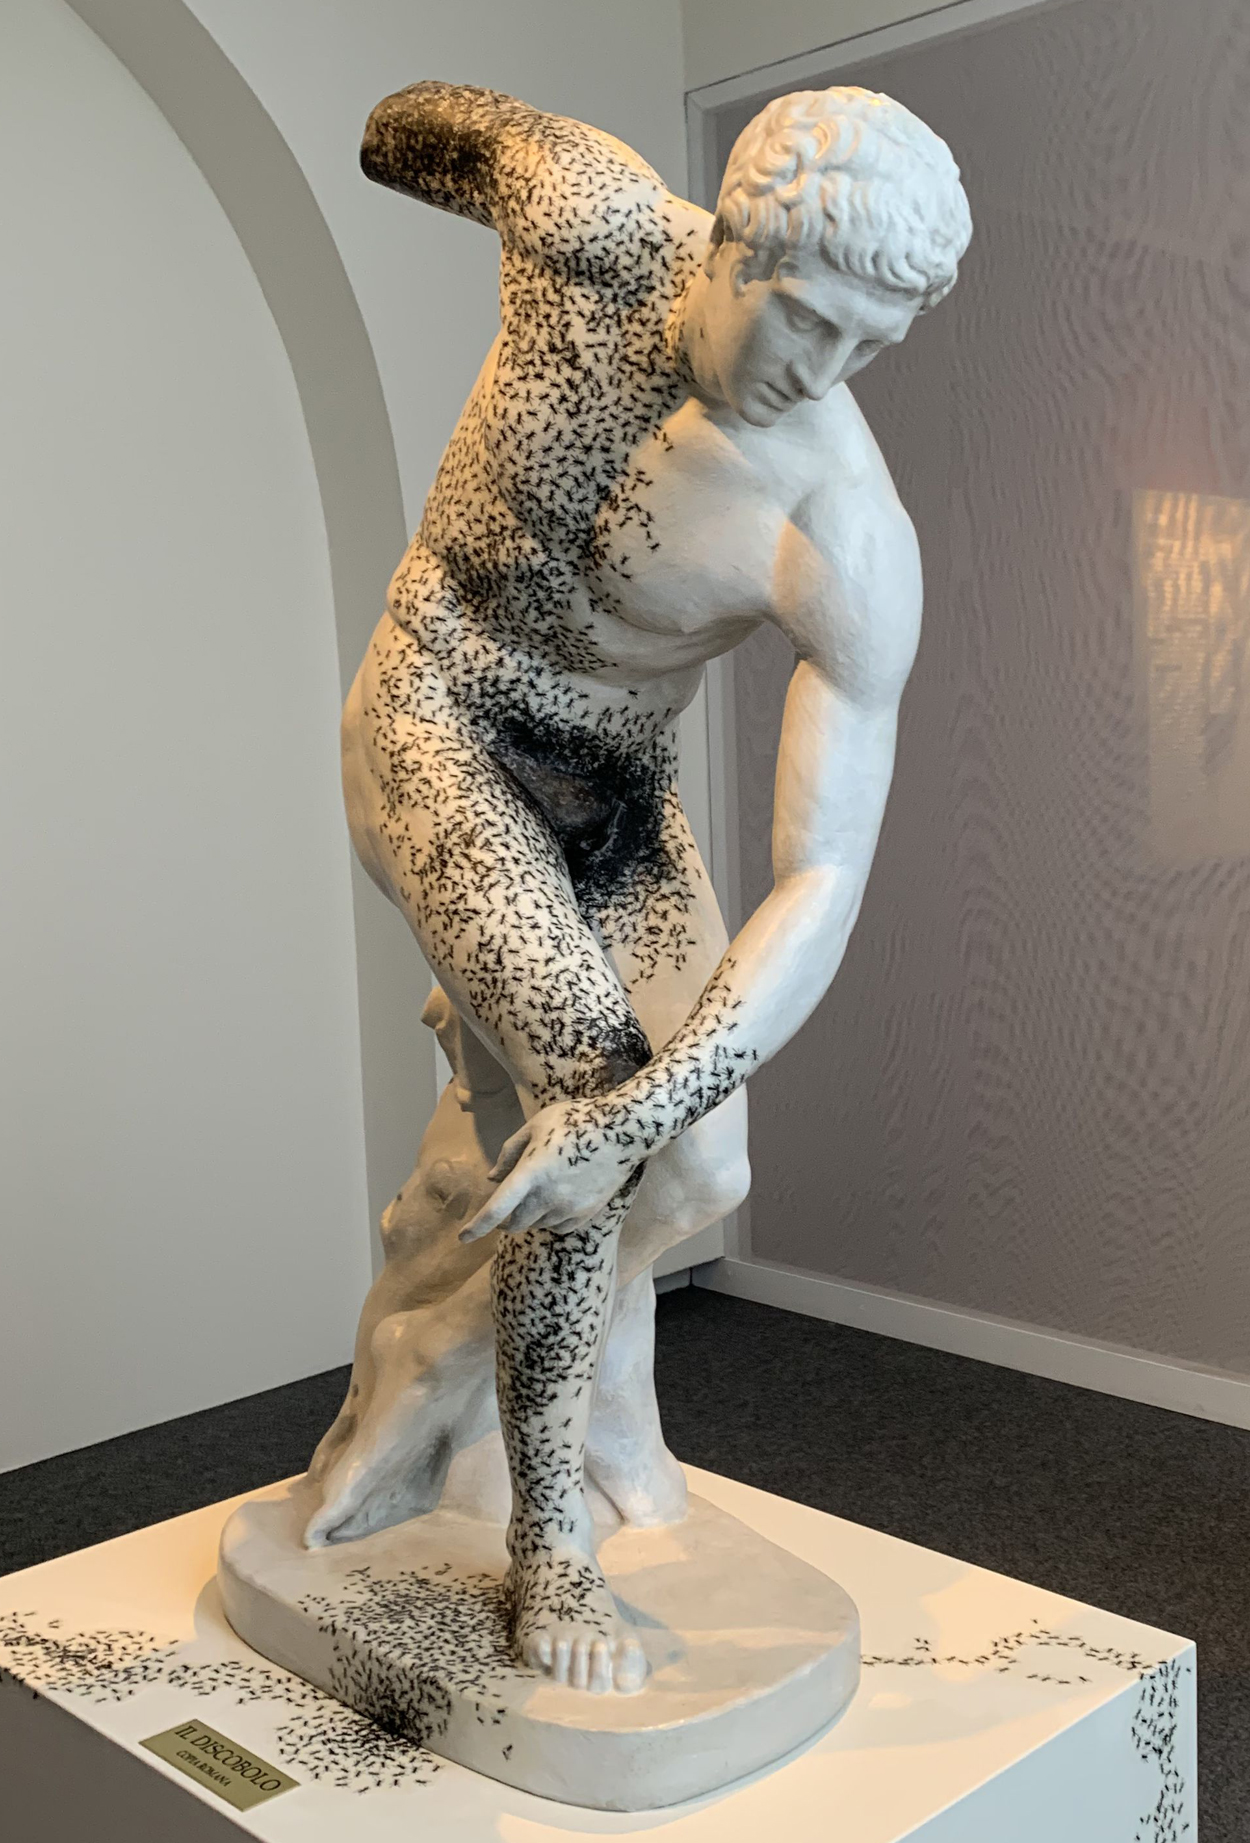 The sculpture "Il Discobolo" with the work of Emilio Isgrò